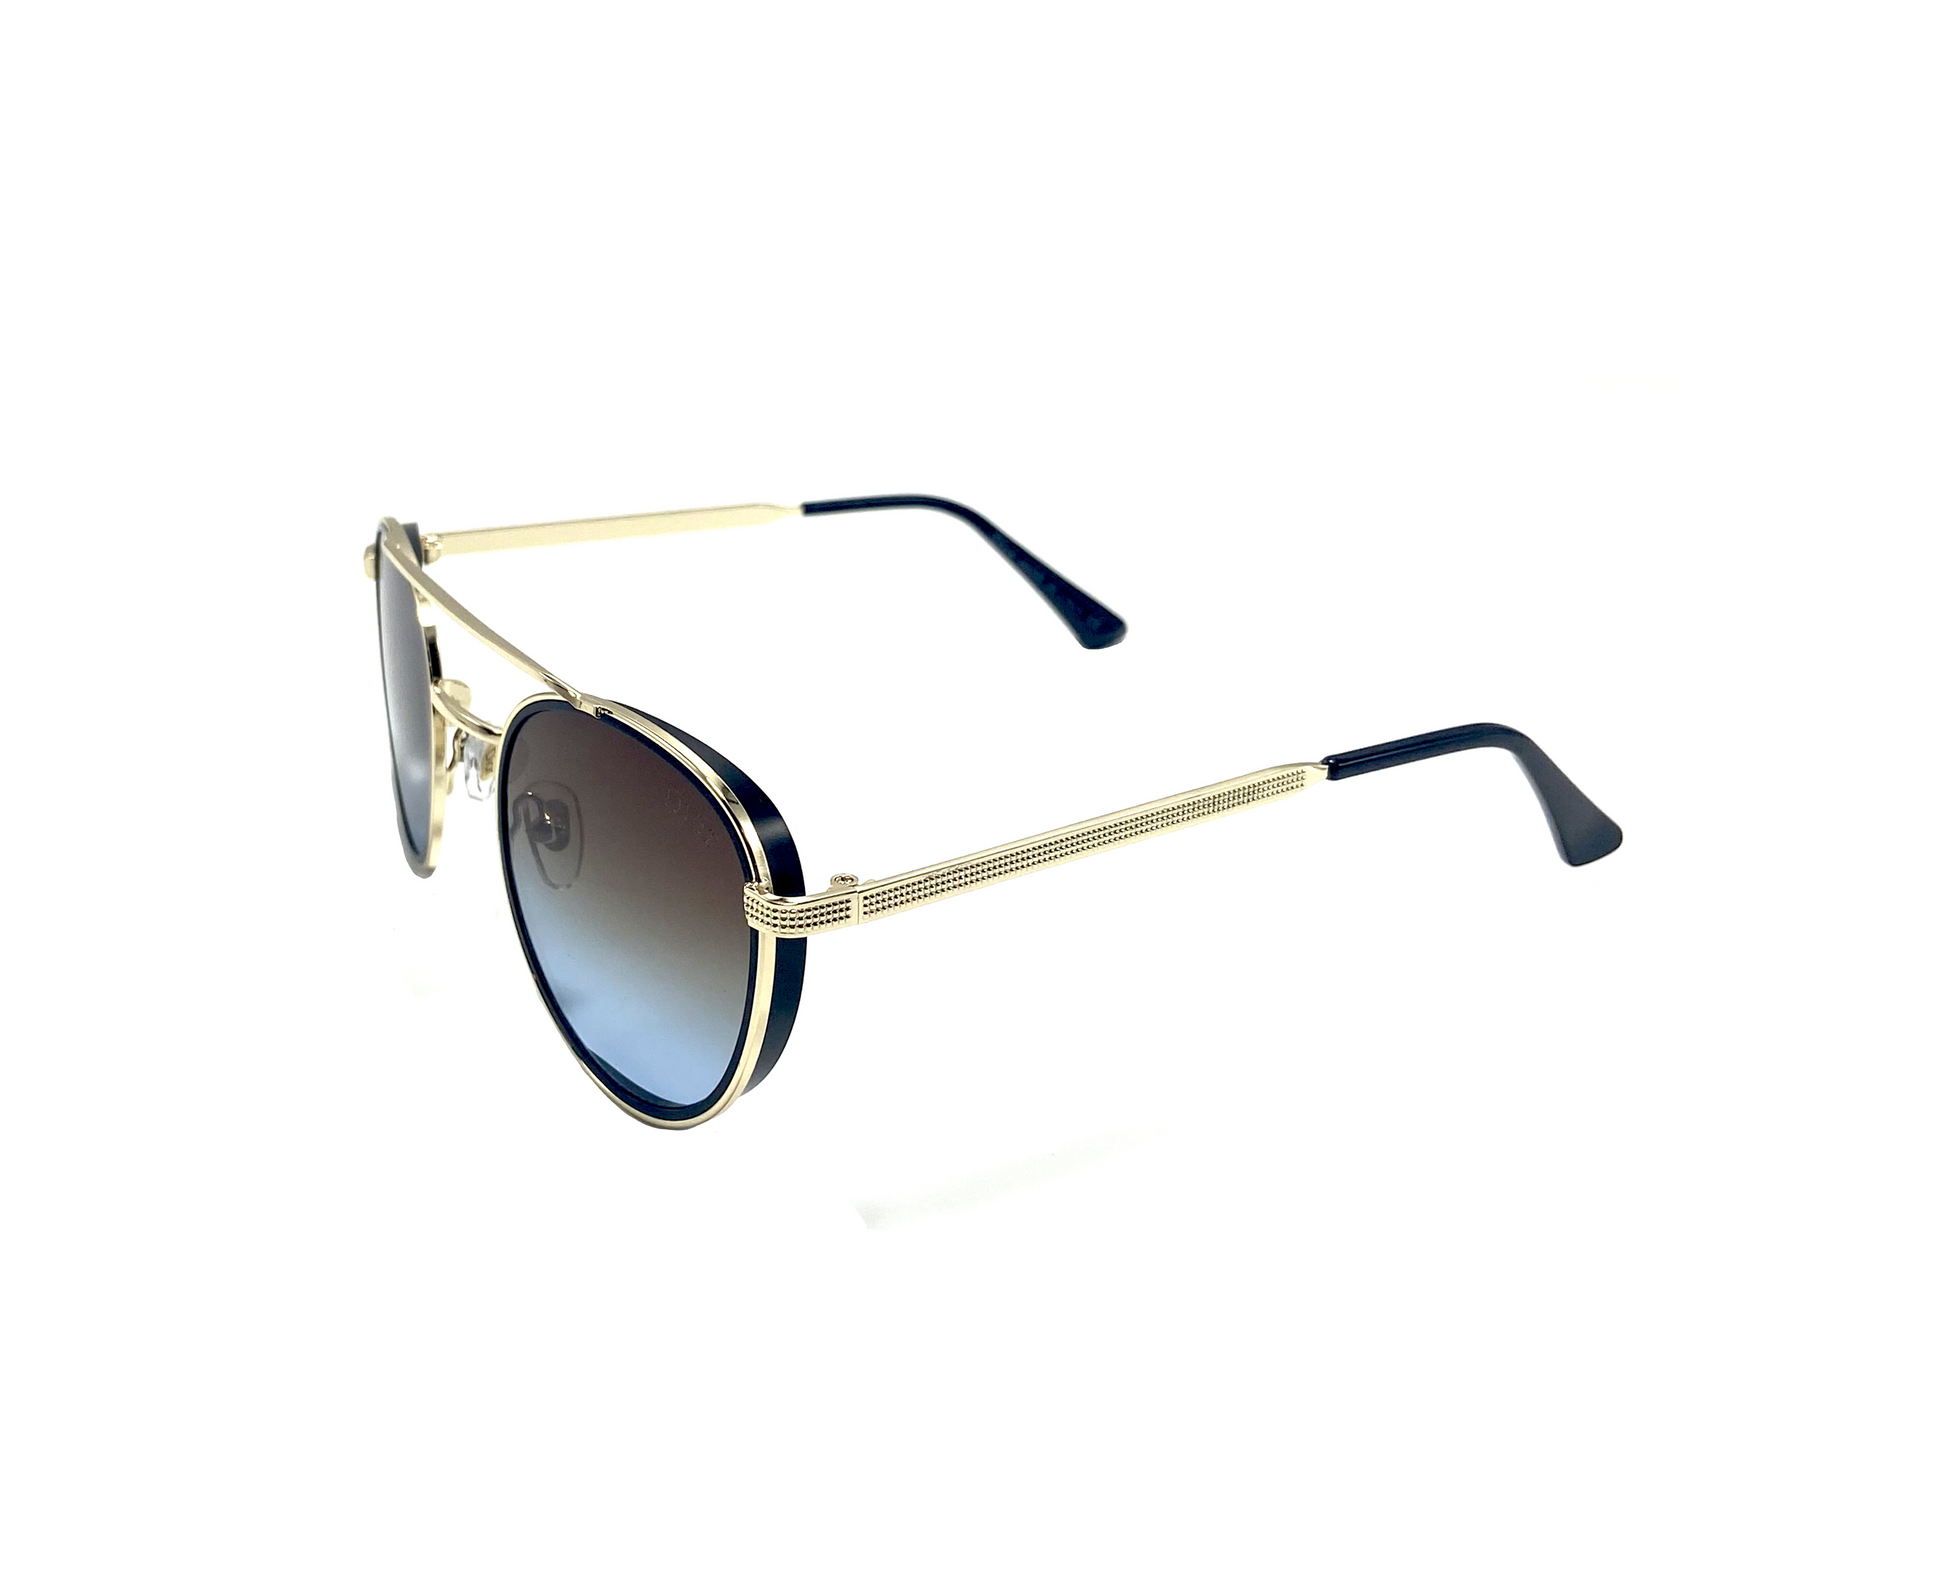 NS Classic - 6872 - Golden - Sunglasses